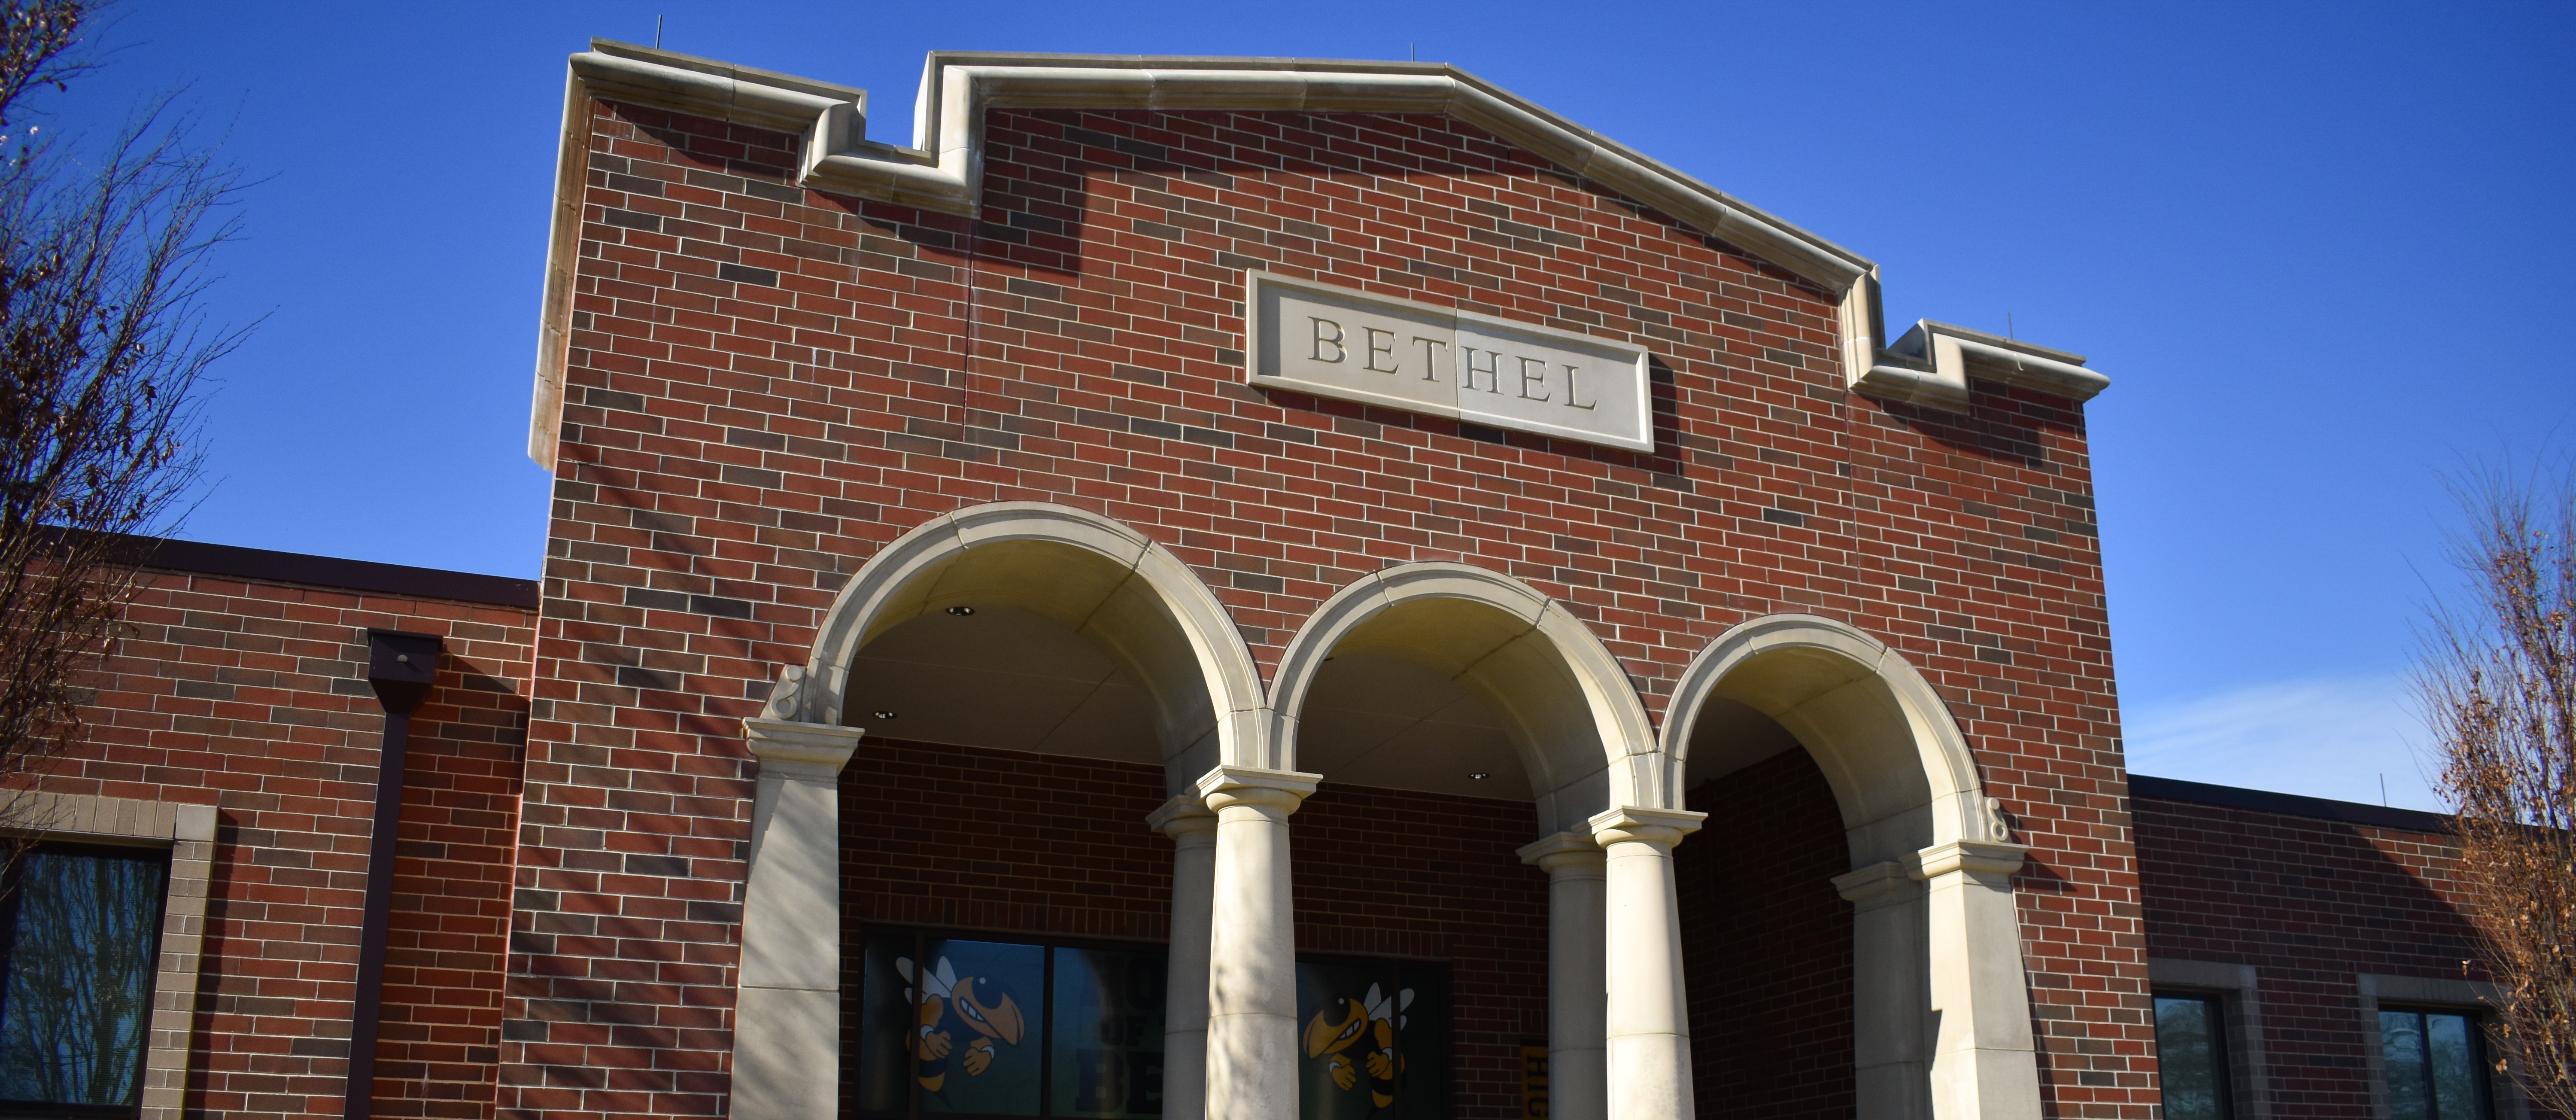 Bethel High School